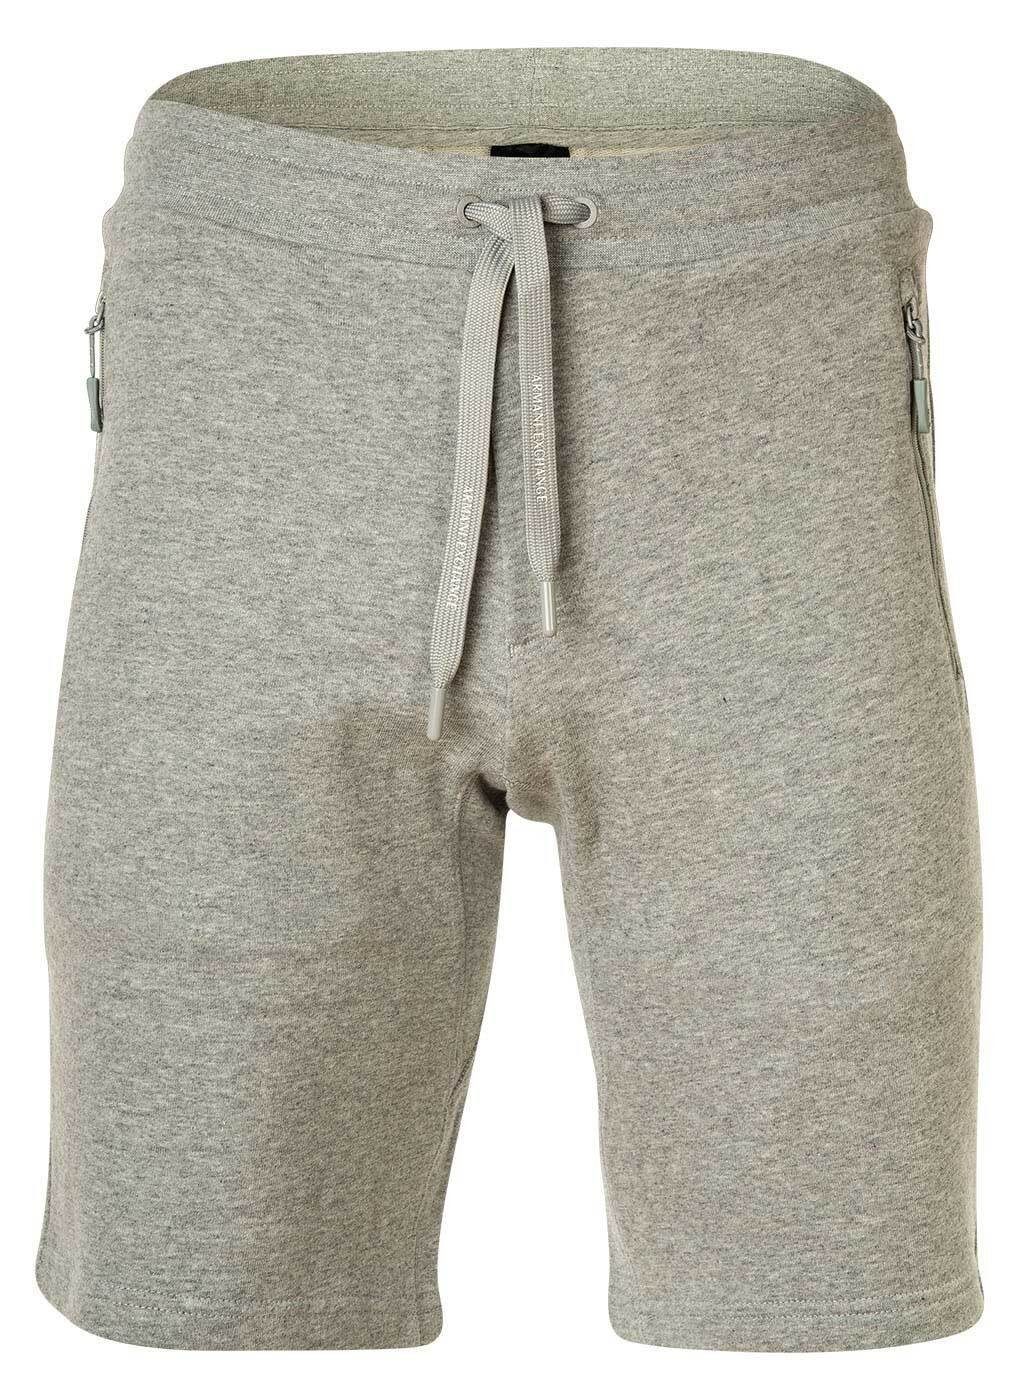 ARMANI EXCHANGE Sweatshorts - Herren Grau Pants, kurz Jogginghose Loungewear